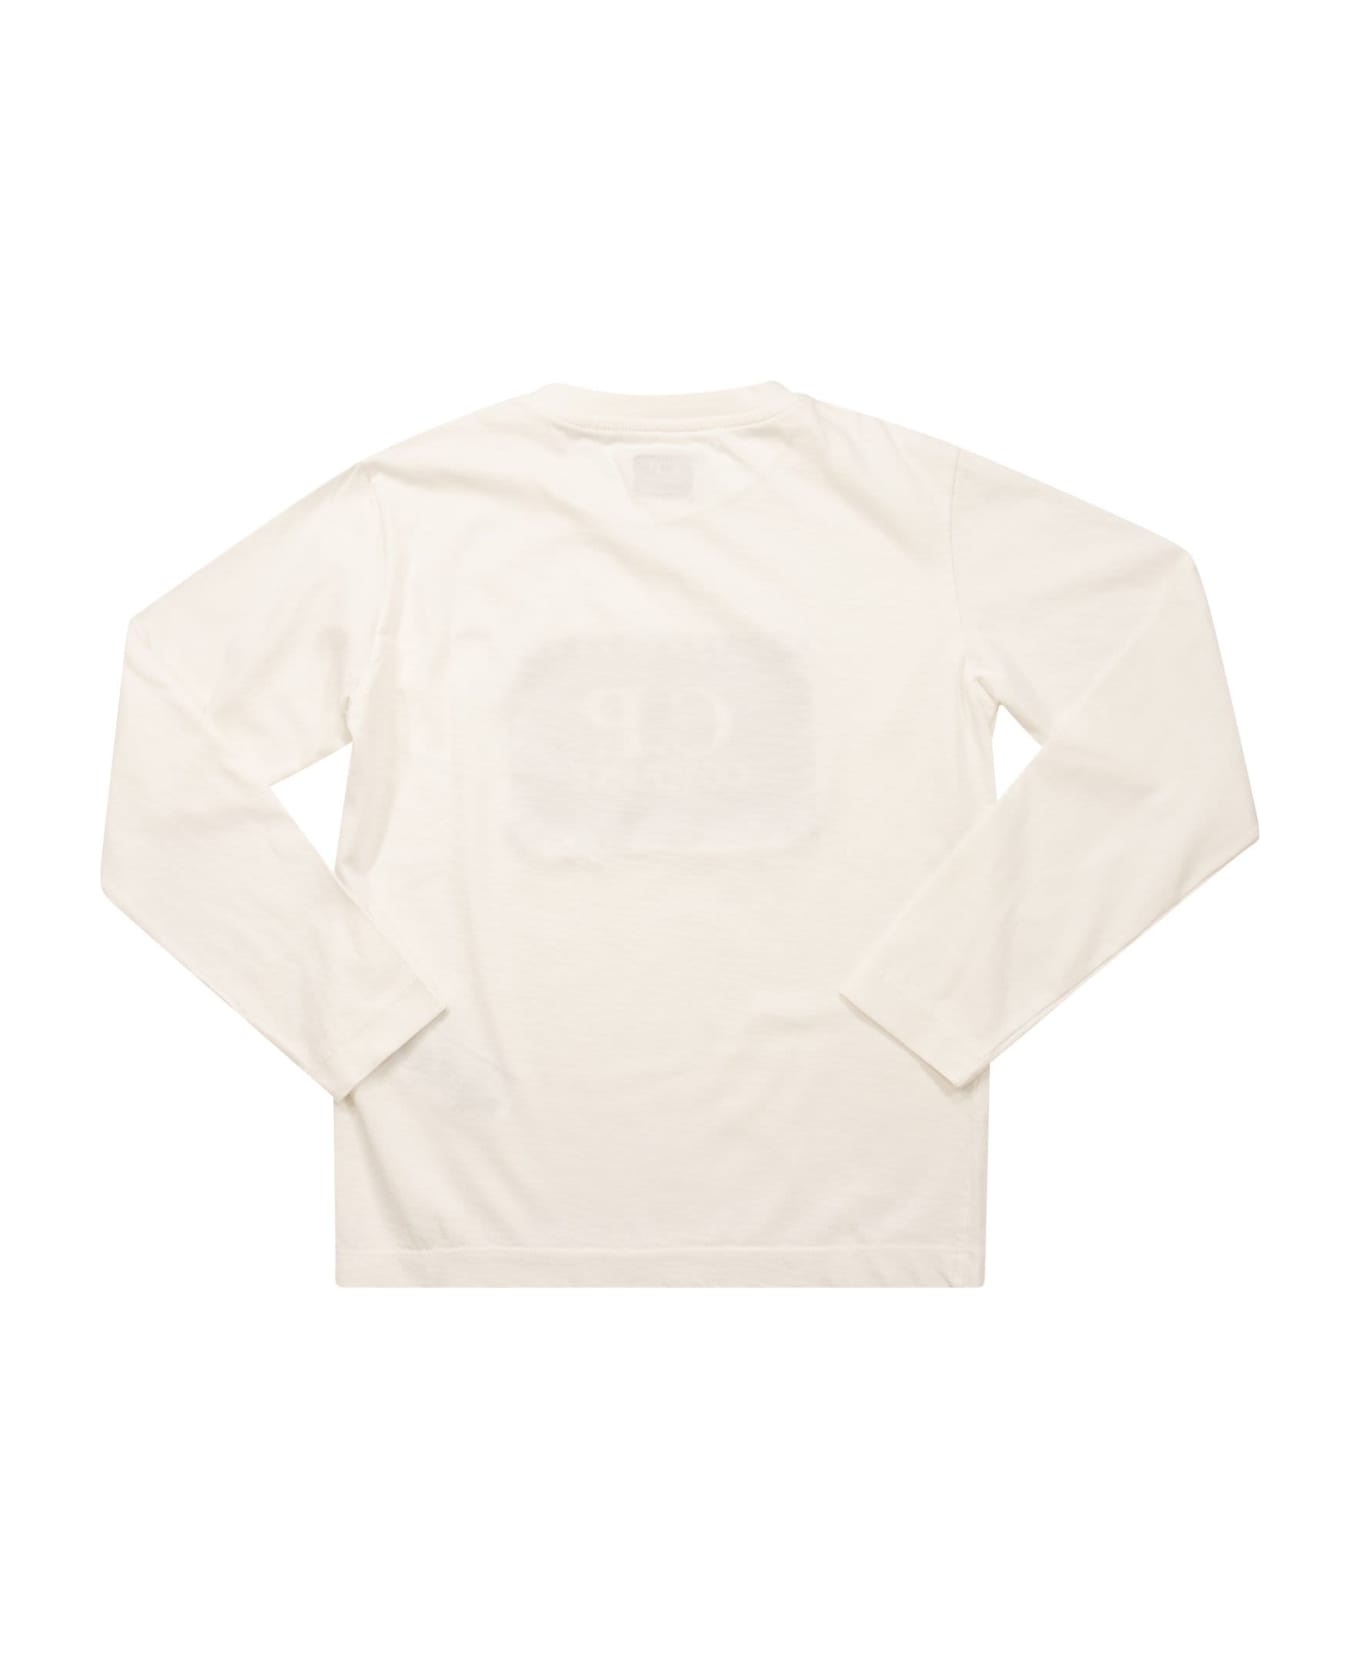 C.P. Company Logo Long Sleeved T-shirt - White Tシャツ＆ポロシャツ